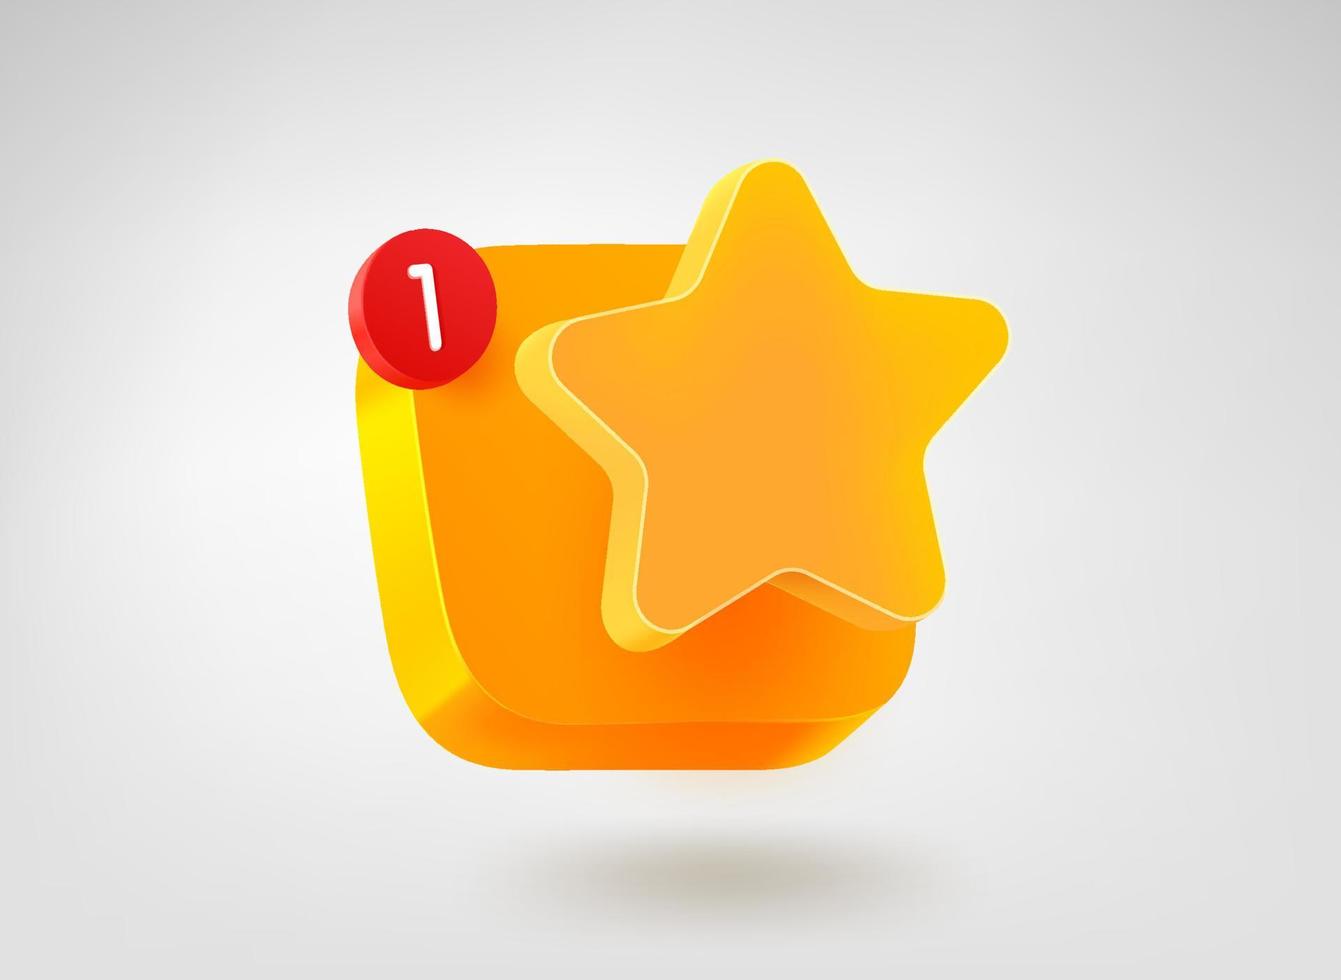 Golden star. Favorite concept. 3d vector mobile application icon